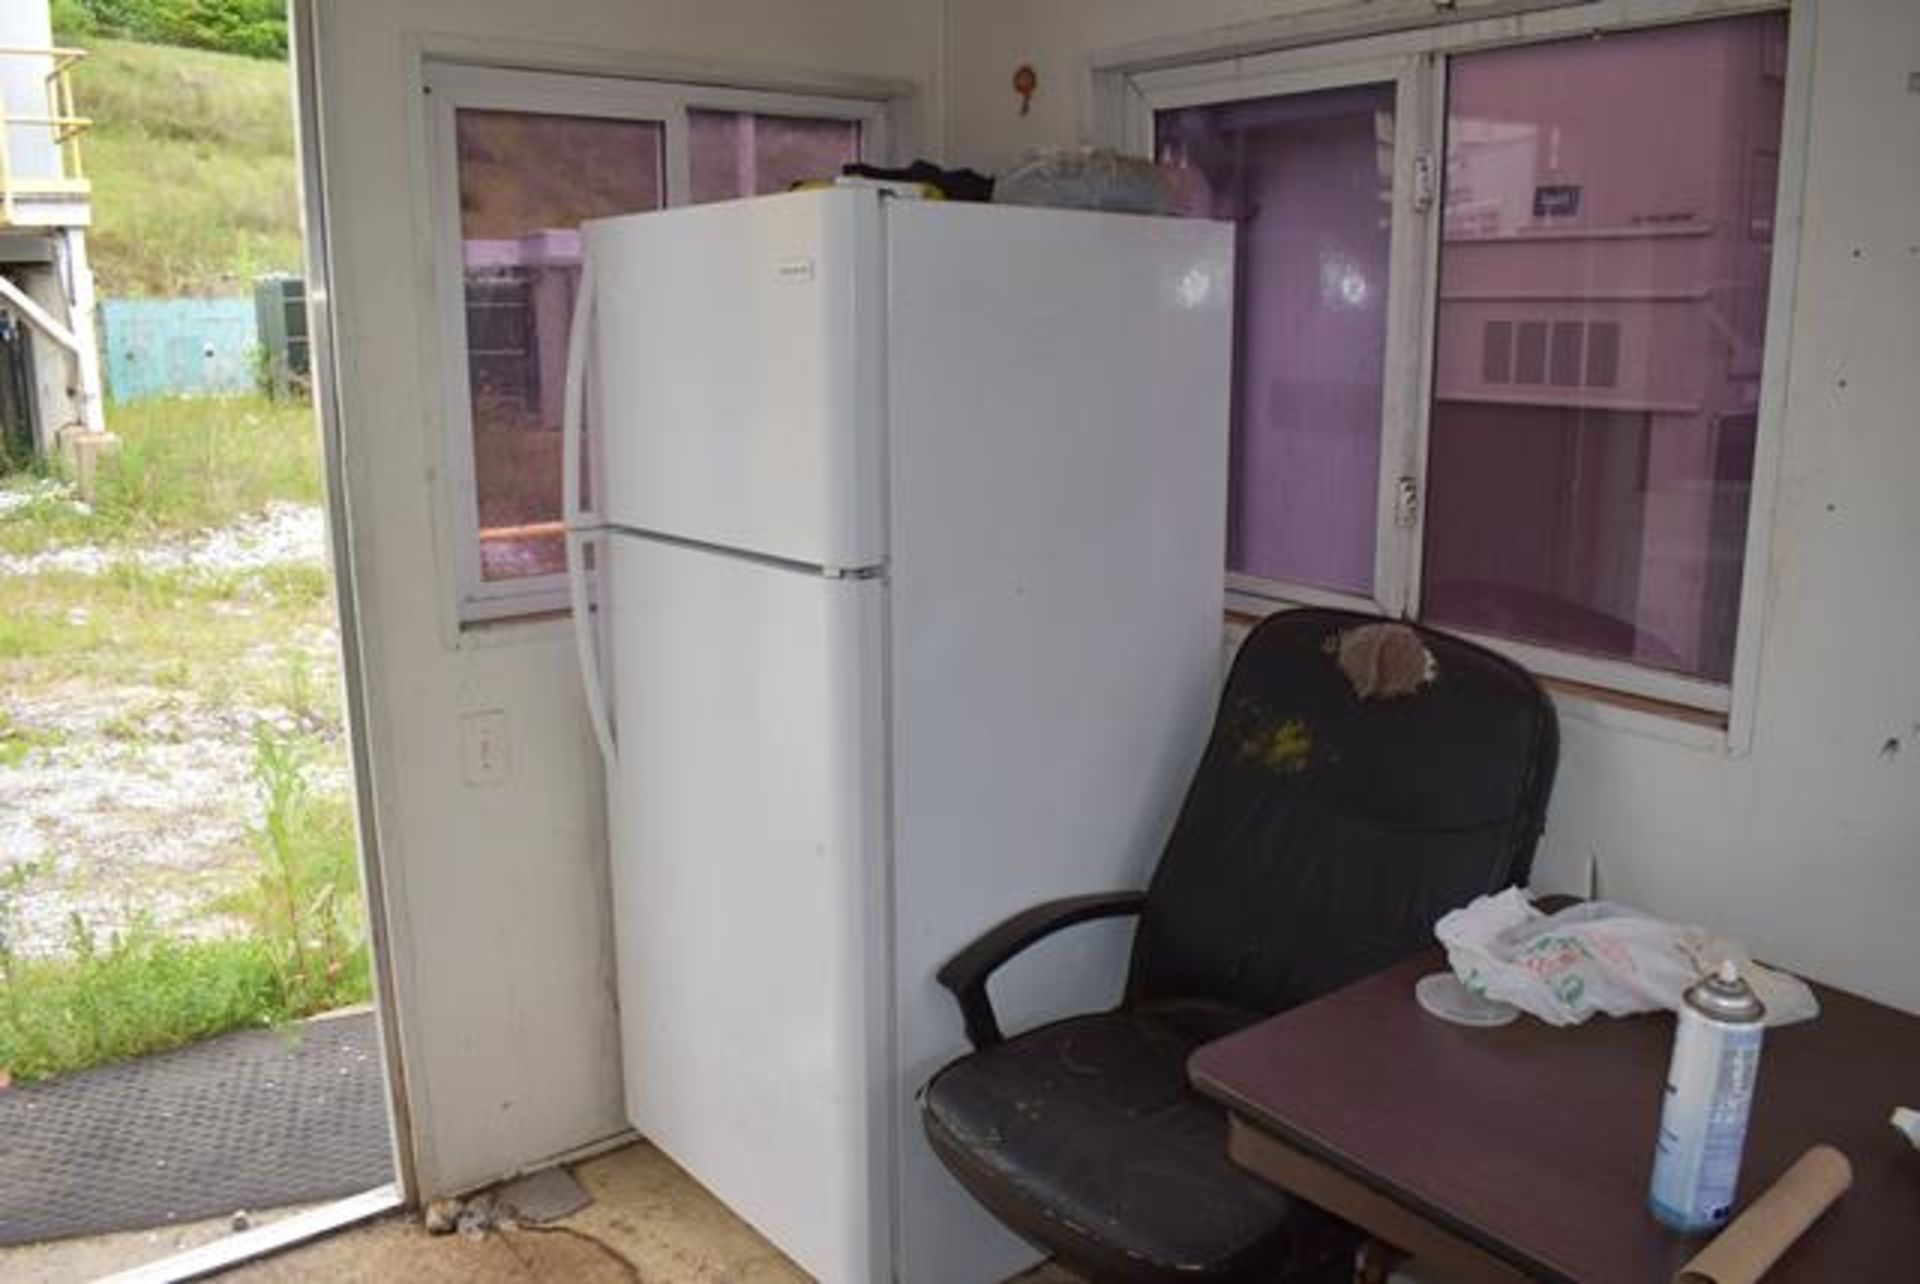 Portable Building/Office, 8' x 12', Single Door w/Windows, Includes Frigidaire Refrigerator - Image 2 of 2